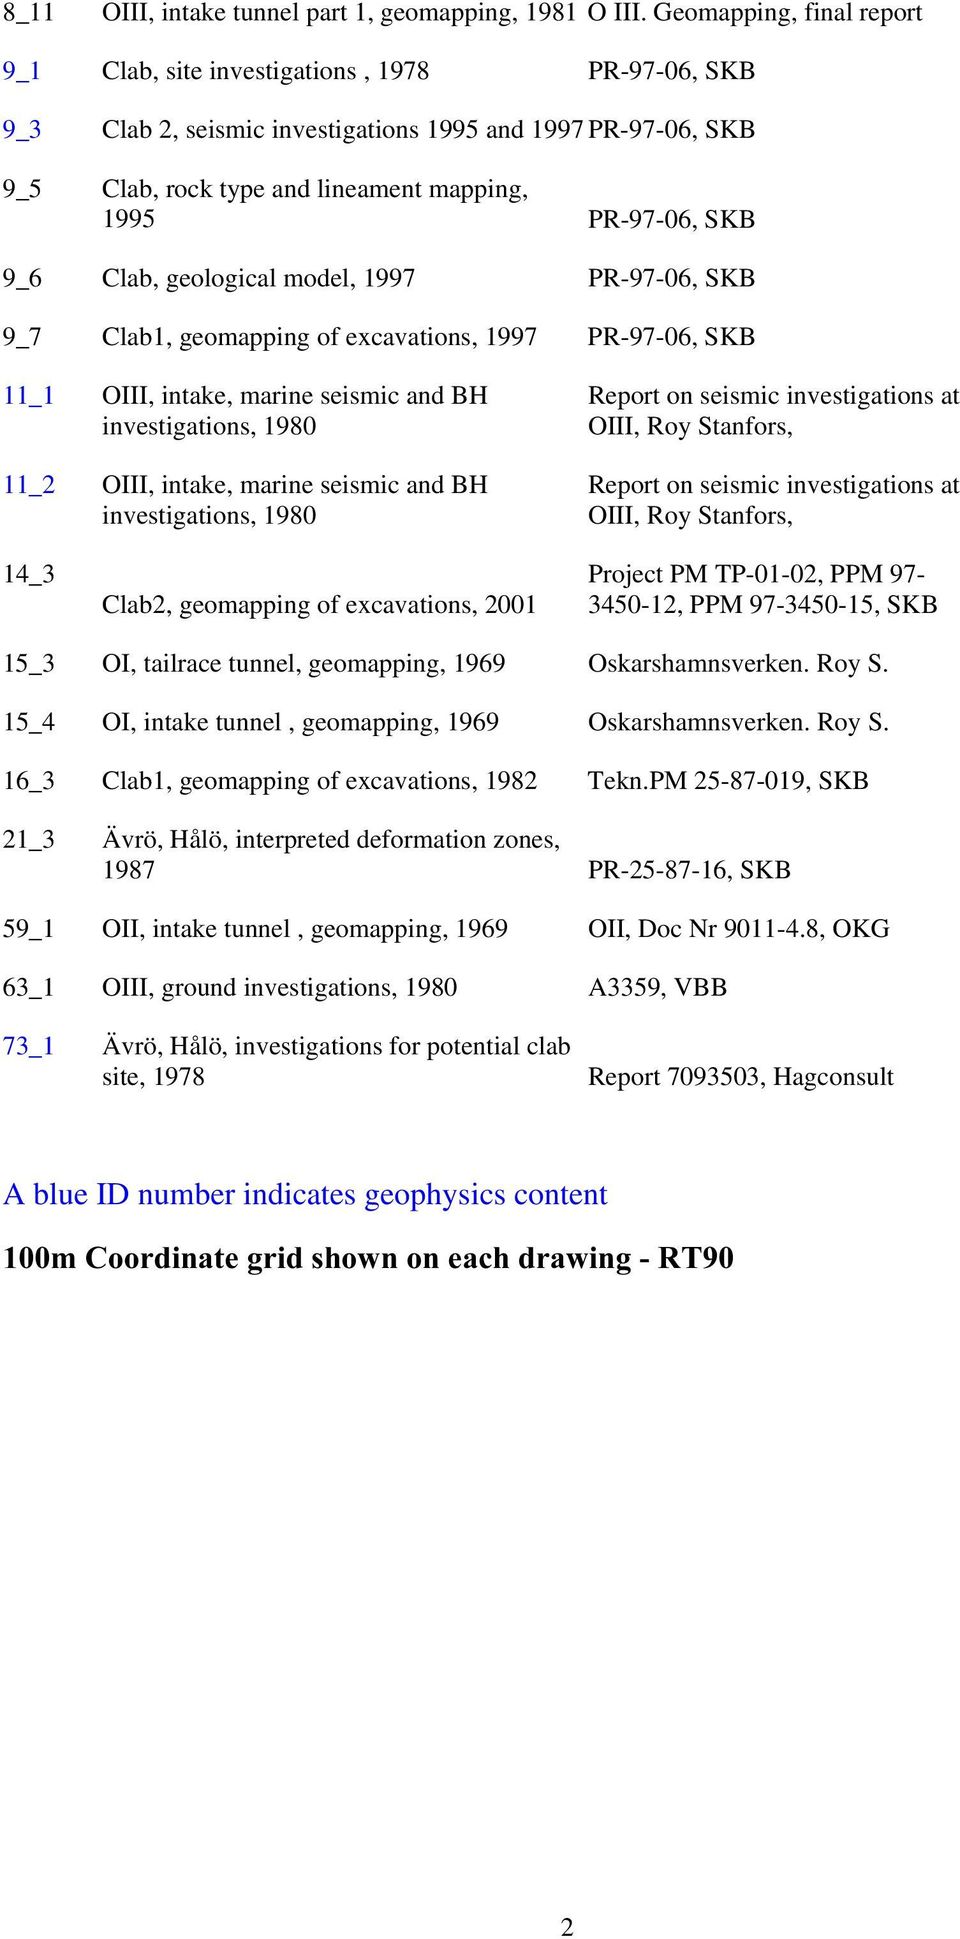 model, 1997 PR-97-06, SKB 9_7 Clab1, geo of ecavations, 1997 PR-97-06, SKB 11_1 OIII, intake, marine seismic and BH investigations, 1980 11_2 OIII, intake, marine seismic and BH investigations, 1980